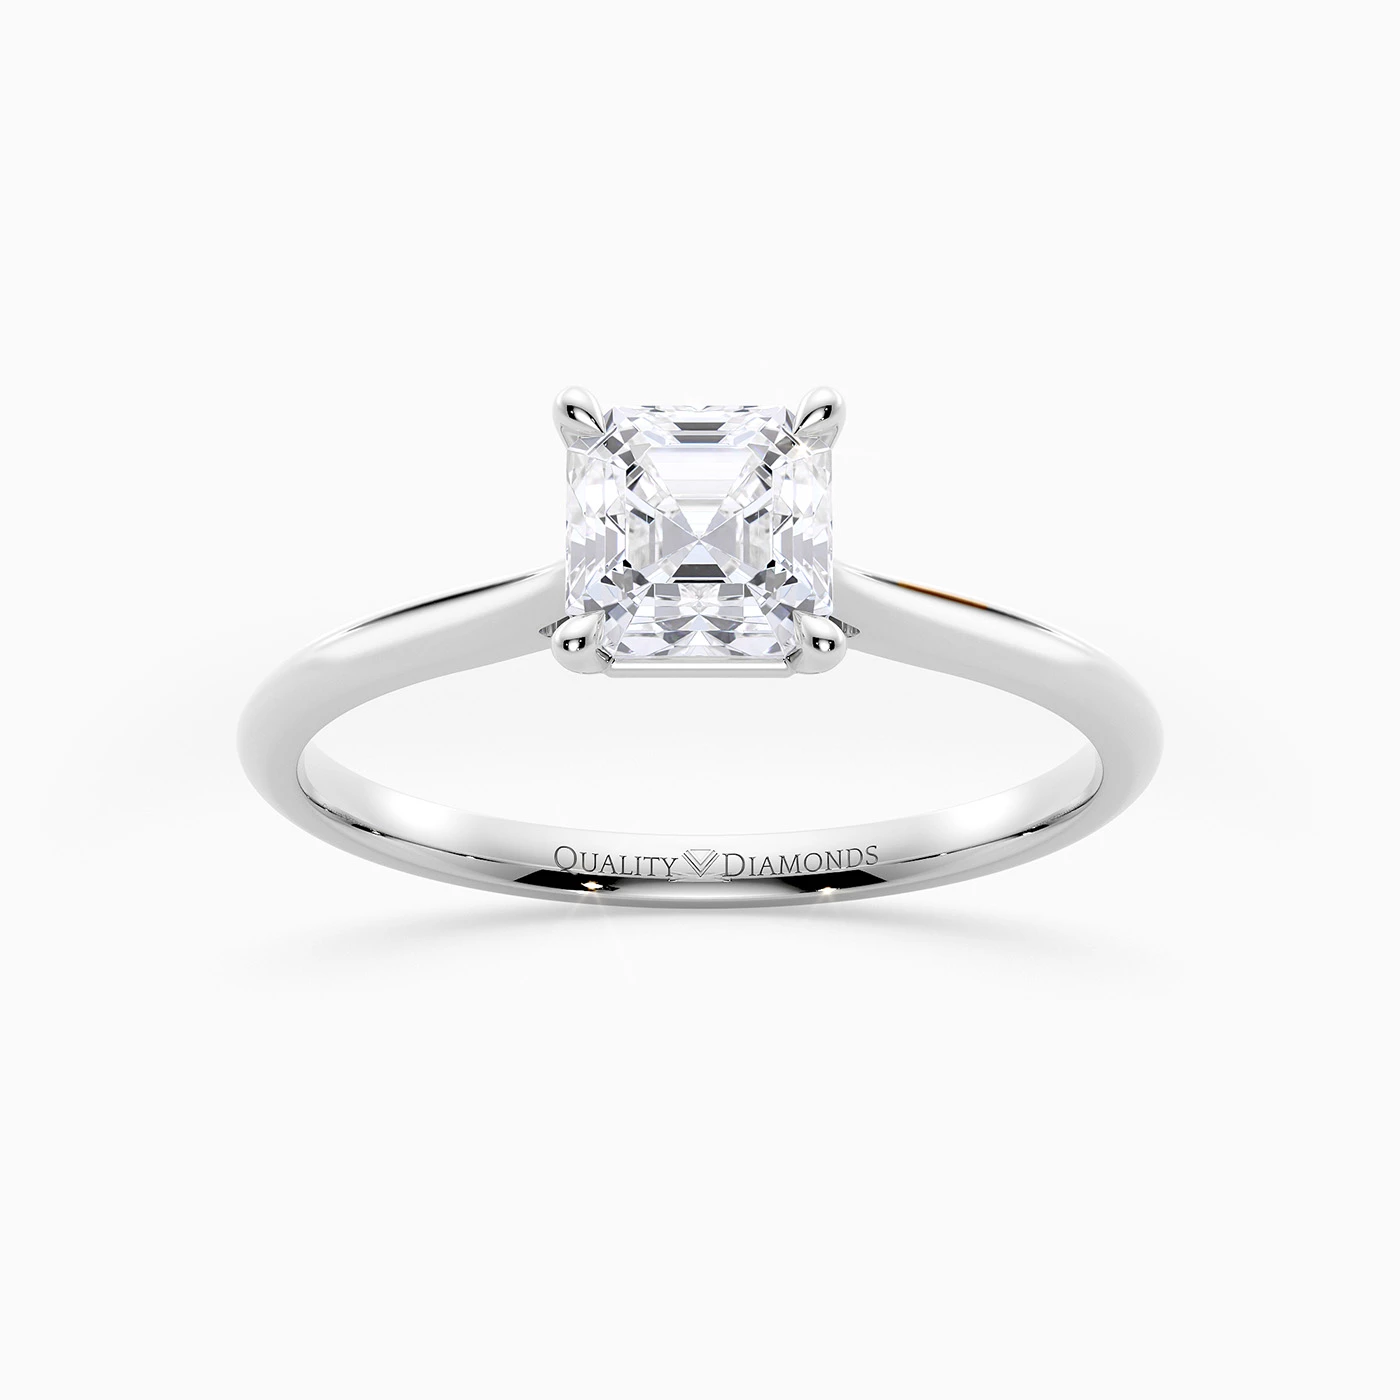 Asscher Carys Diamond Ring in 9K White Gold